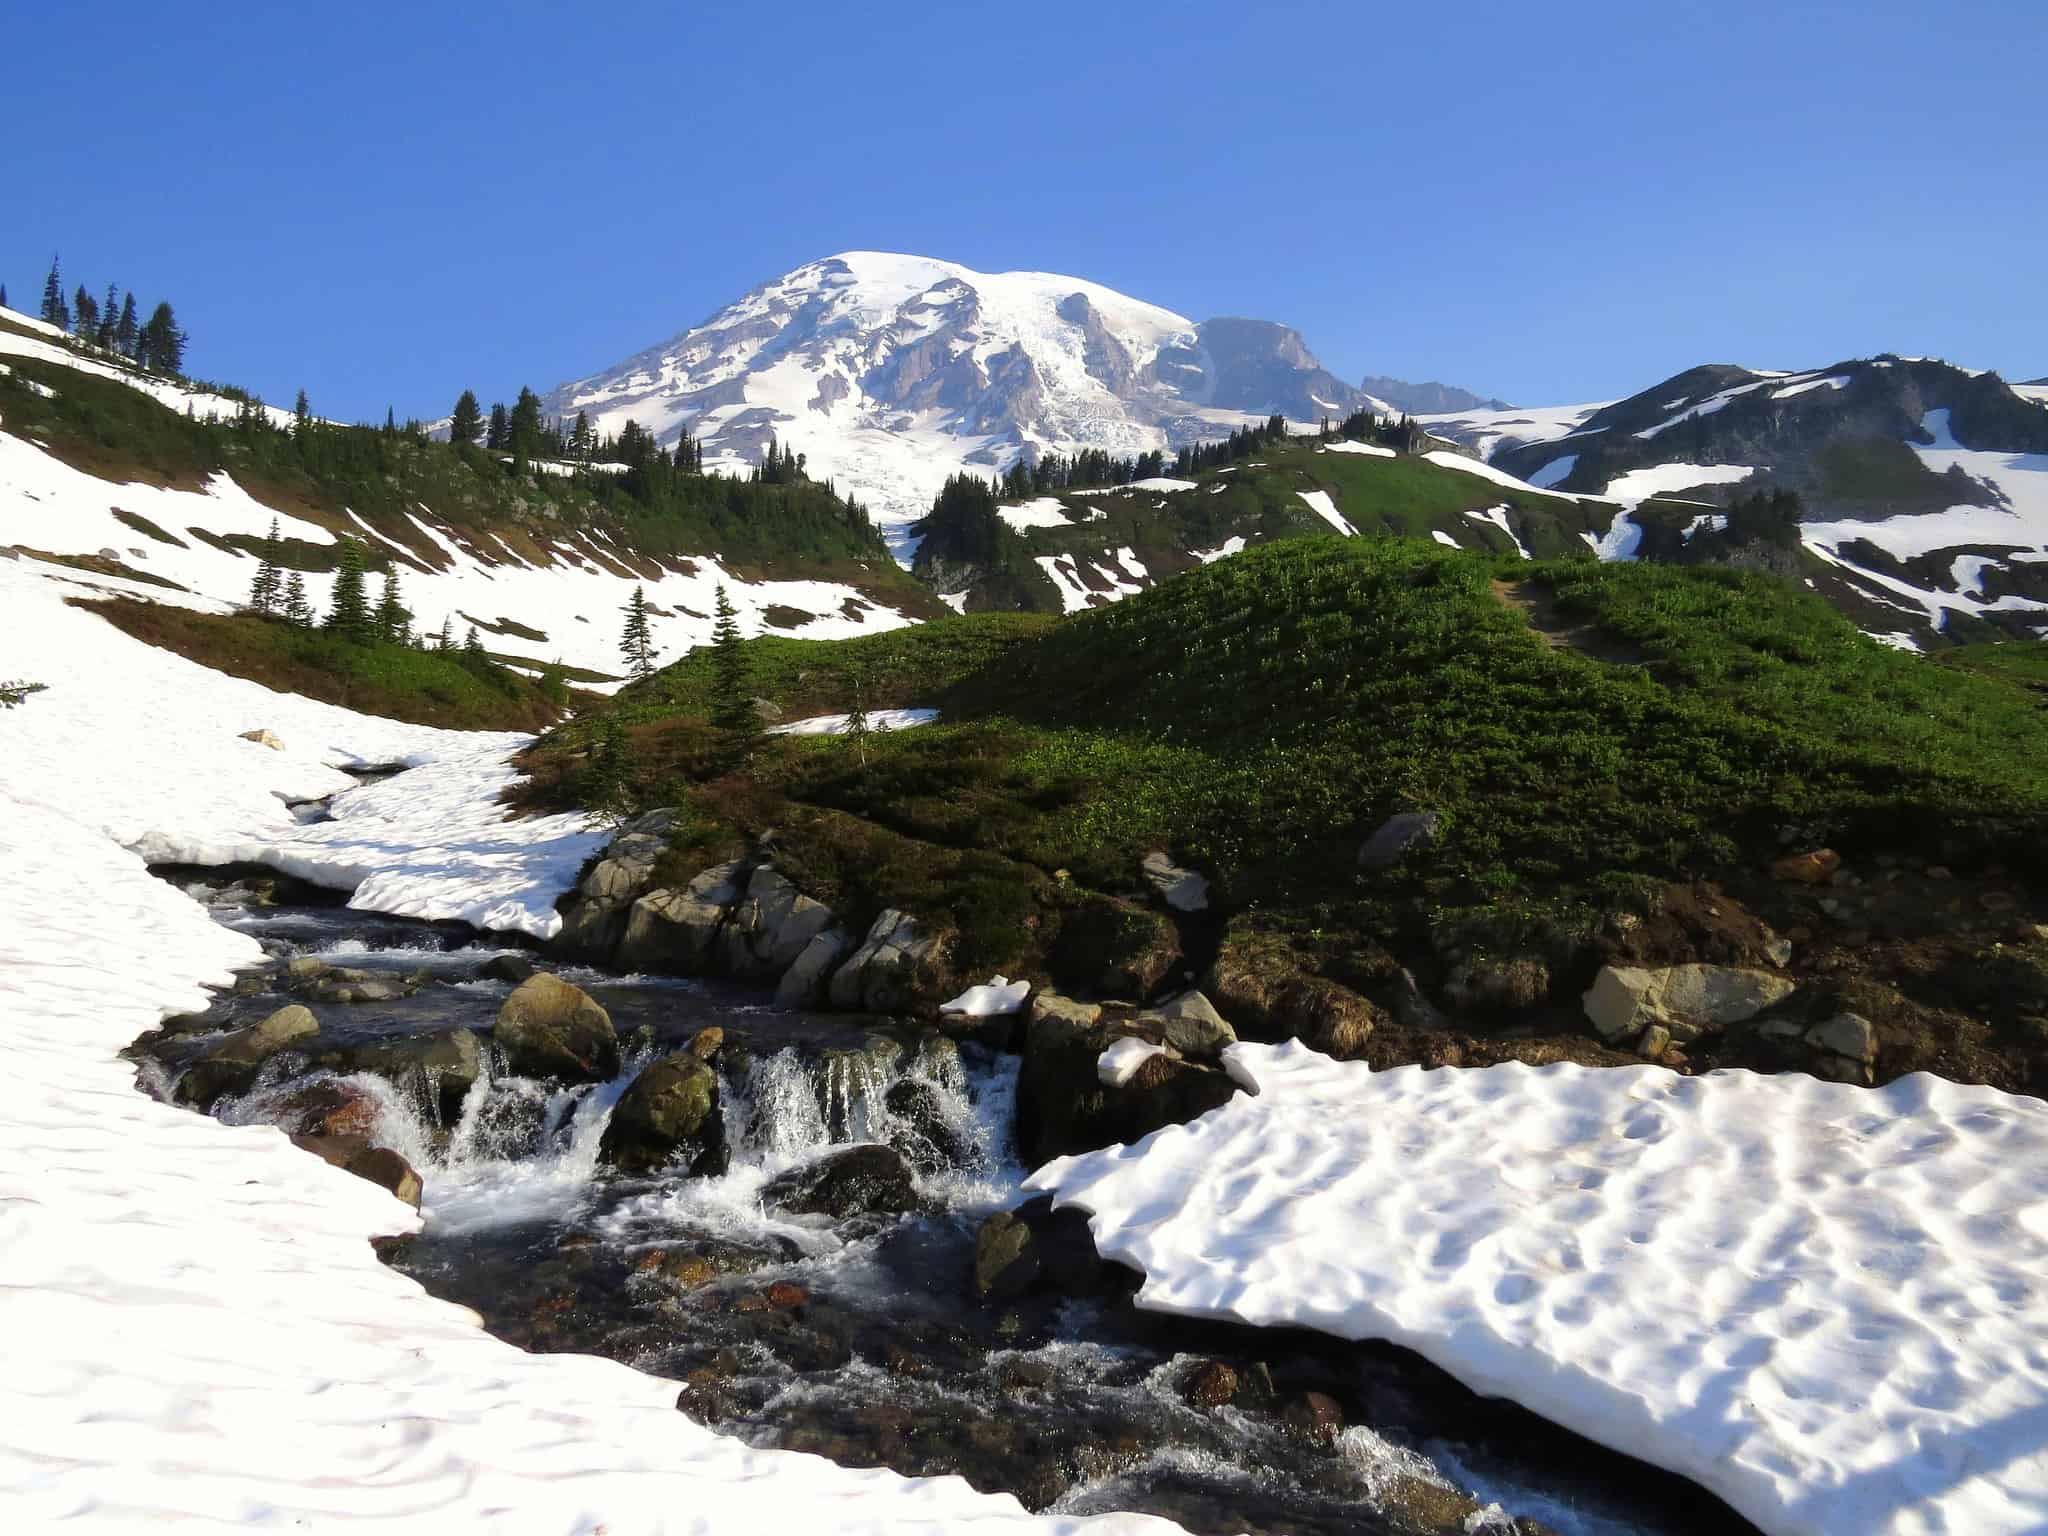 Visit Mount Rainier virtually!